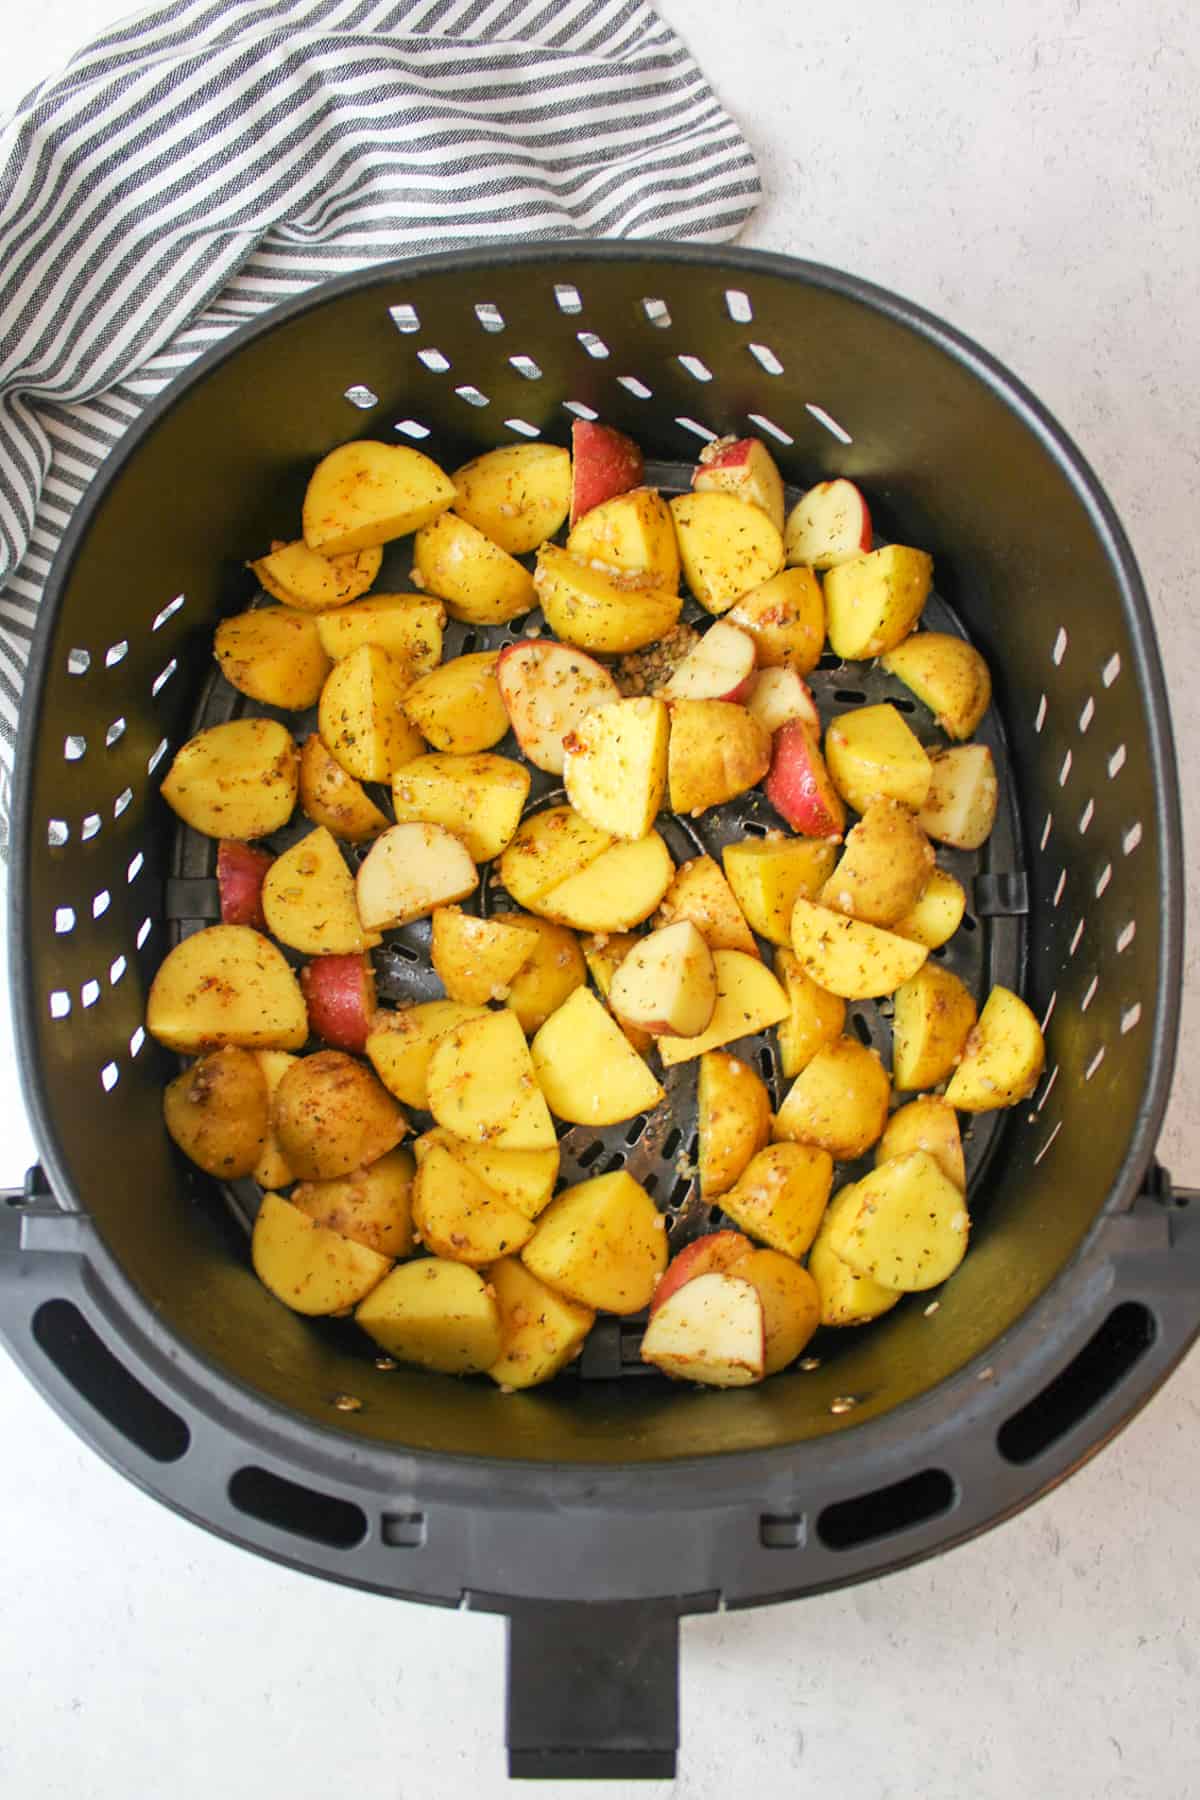 seasoned potatoes in an air fryer basket.